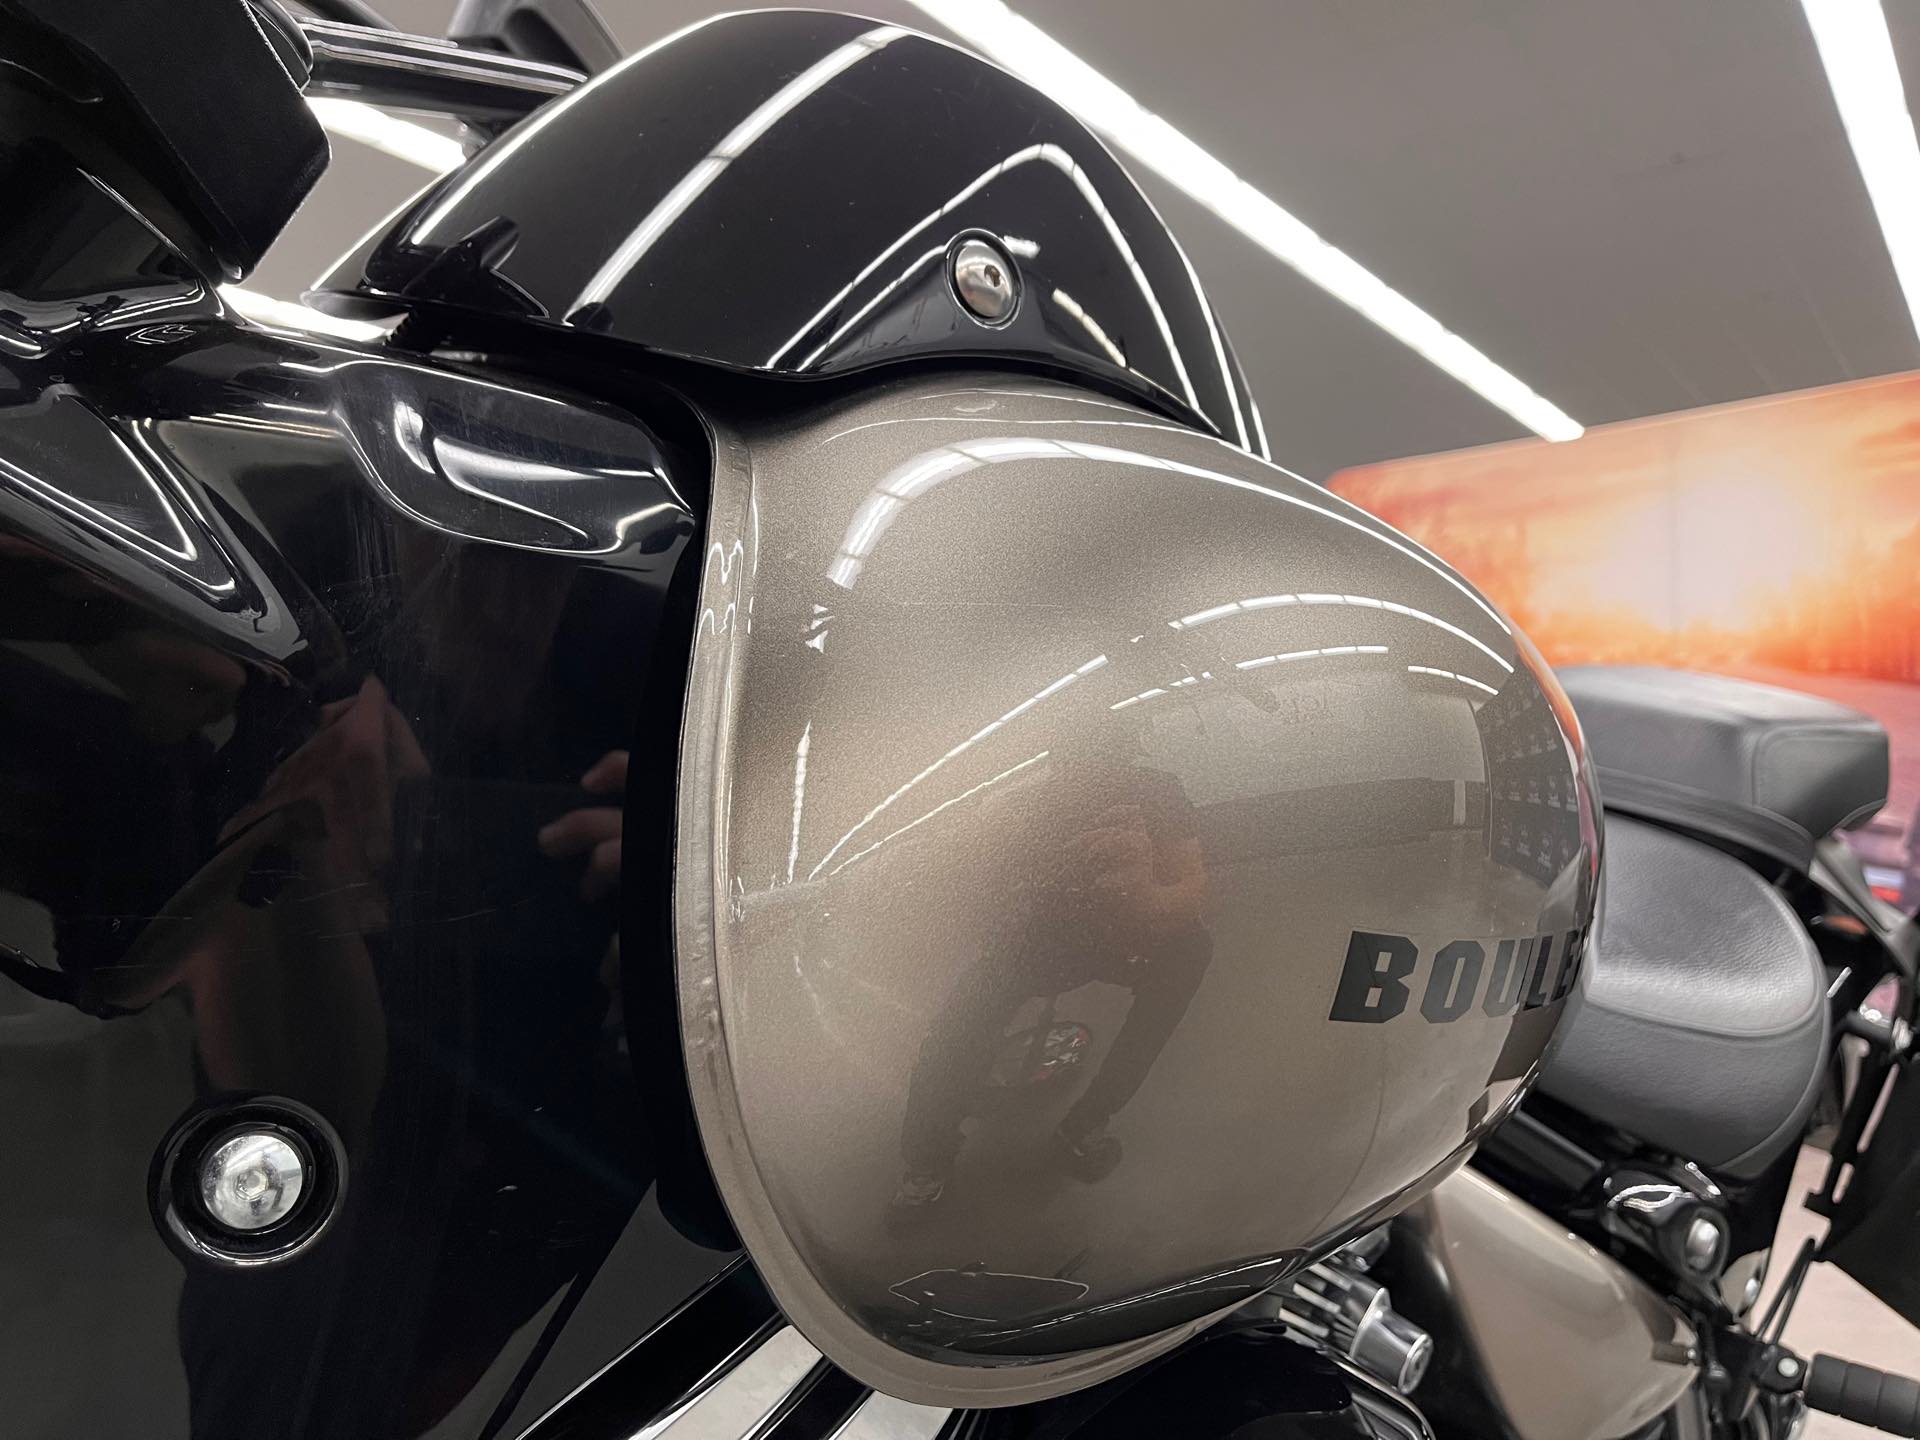 2019 Suzuki Boulevard C90 B.O.S.S. at Aces Motorcycles - Denver